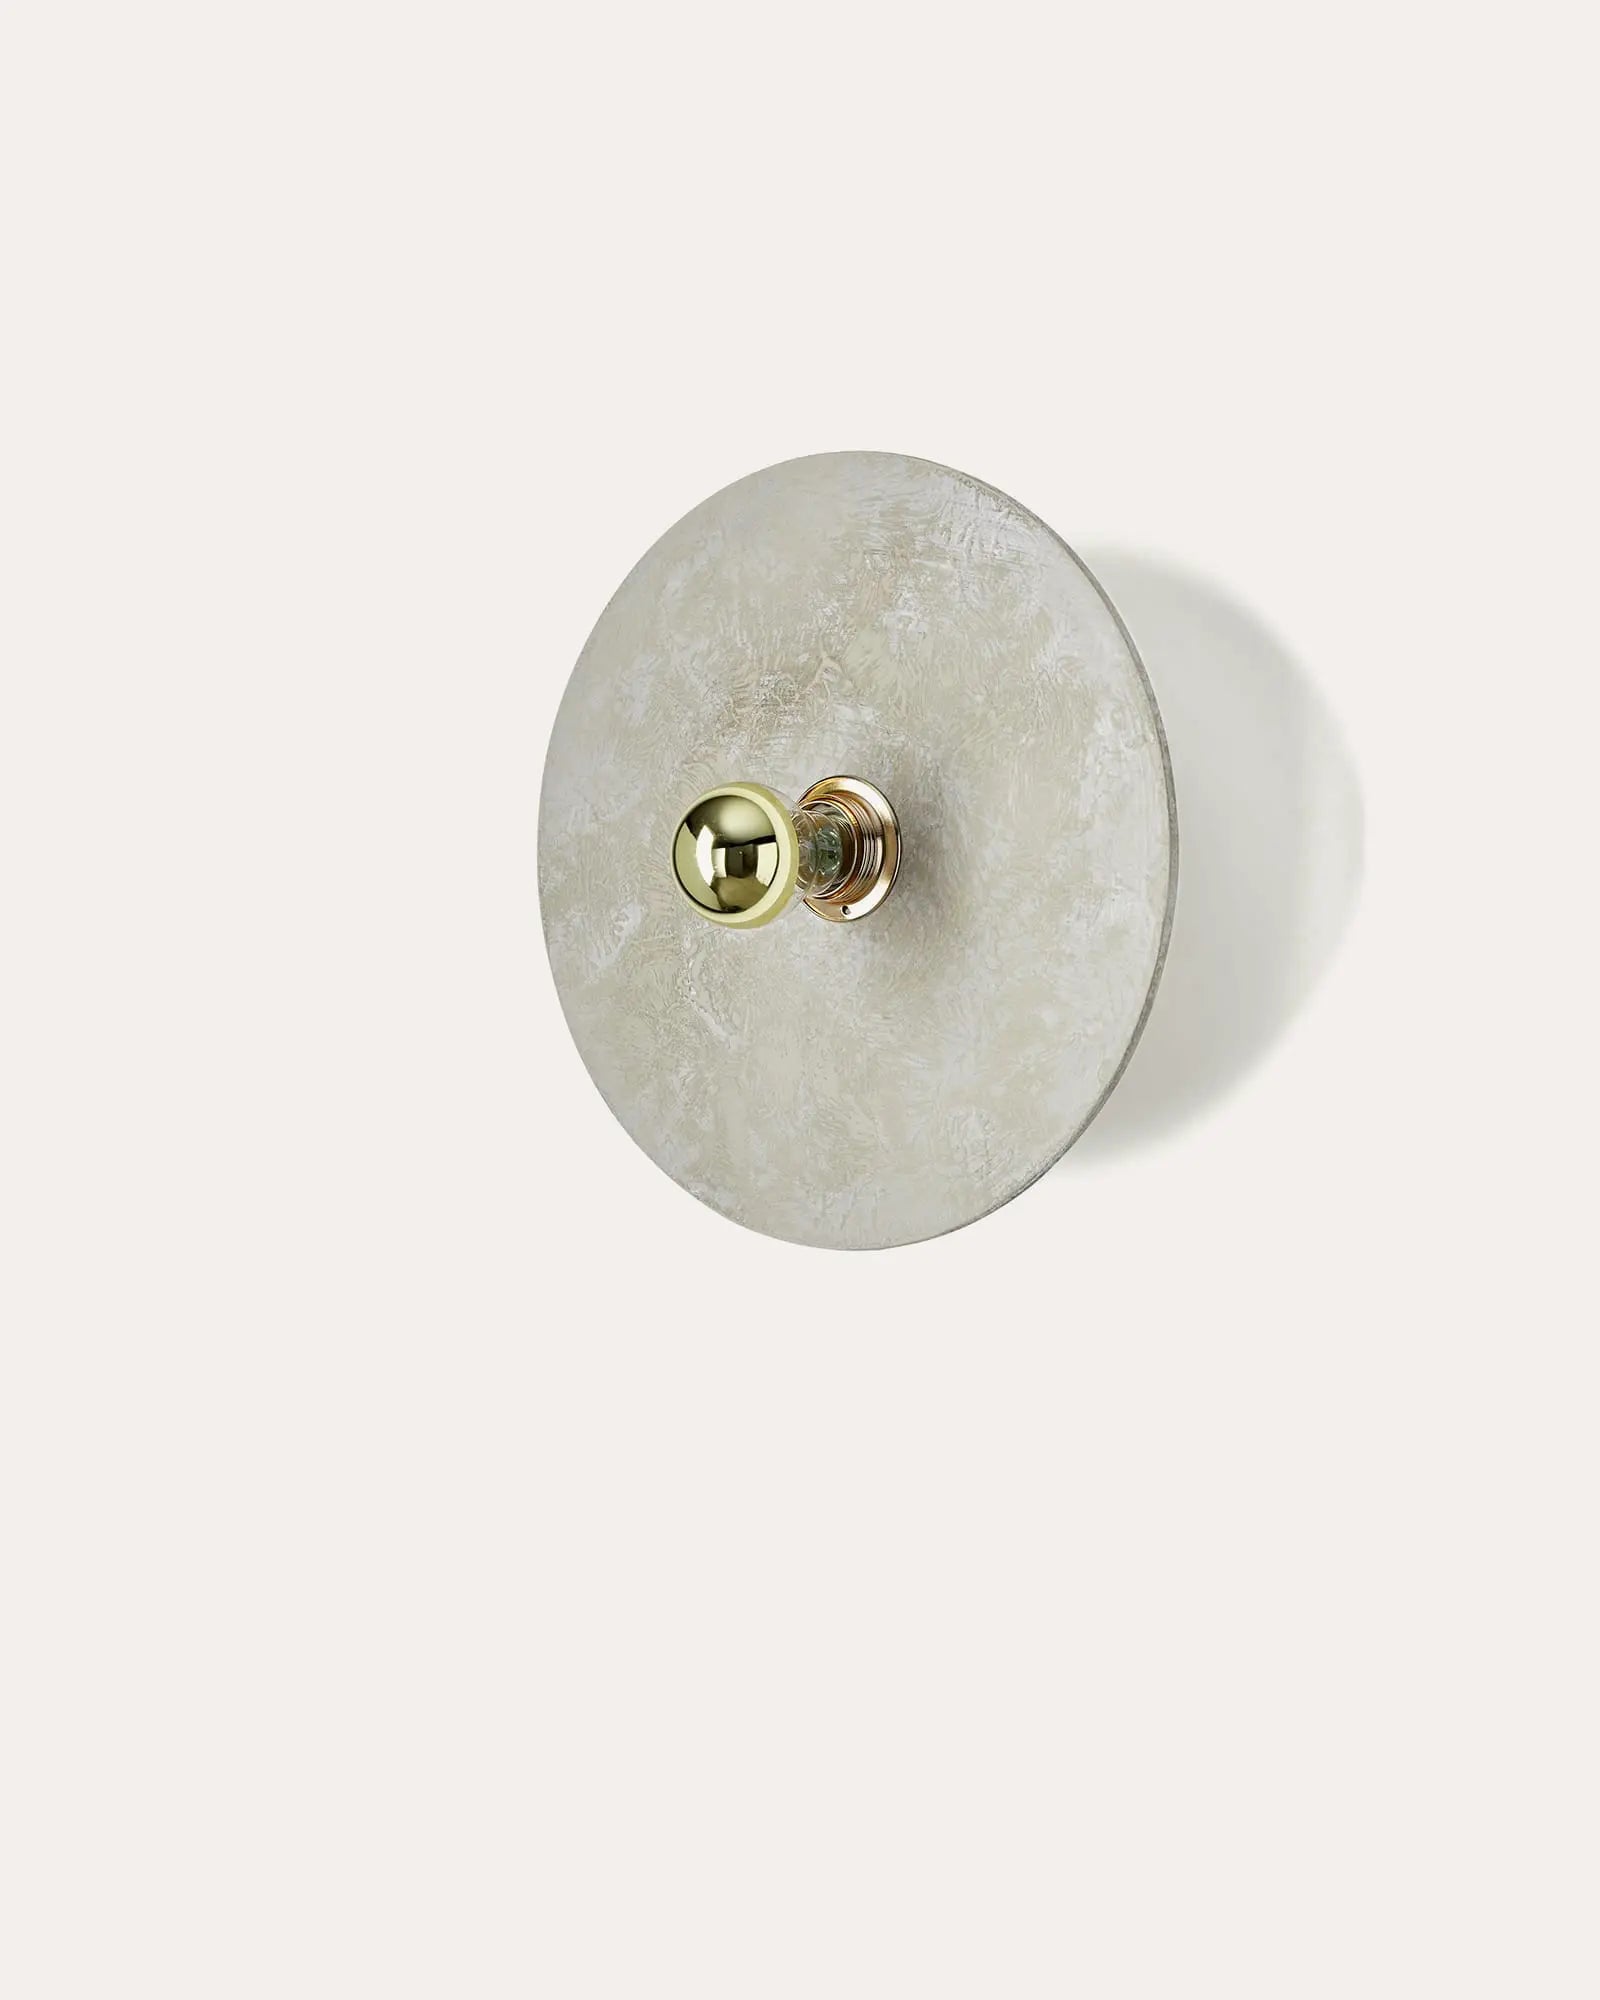 Kassy wall light minimalistic contemporary round alabaster shade